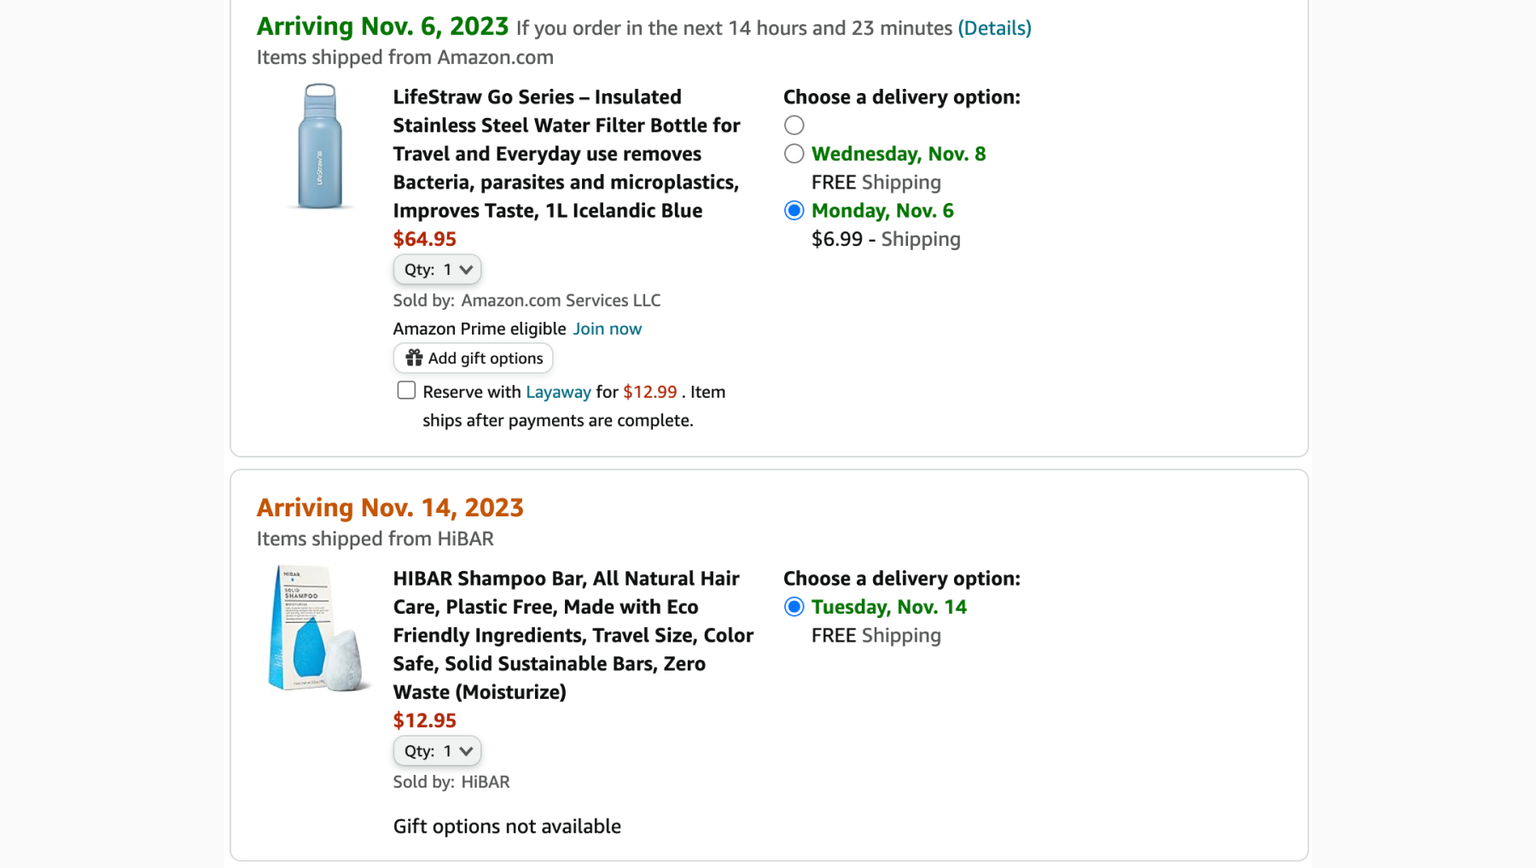 Amazon.com's shipping estimates for multiple items